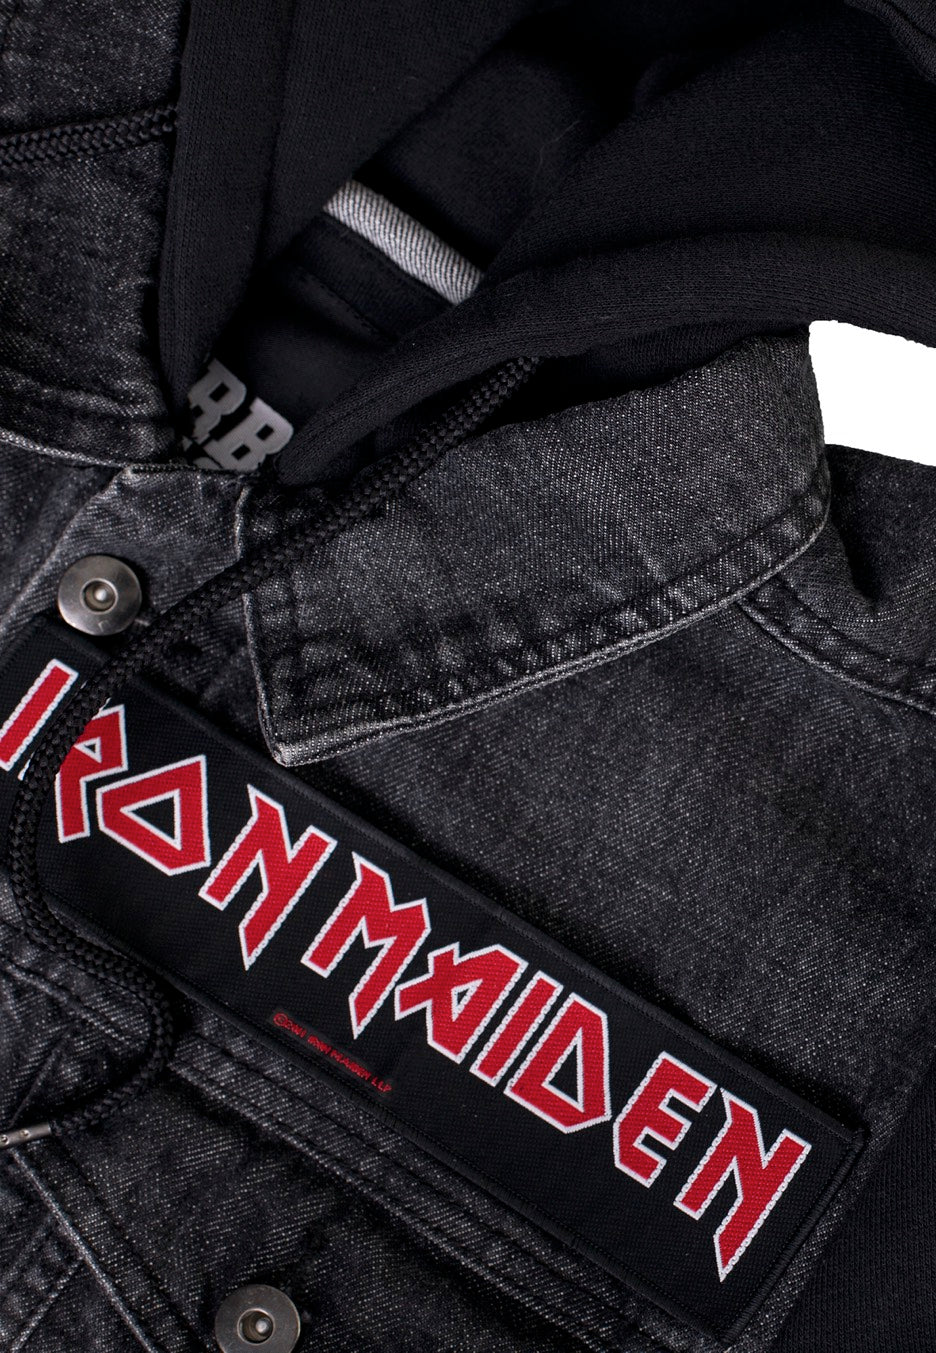 Iron Maiden - Logo - Patch